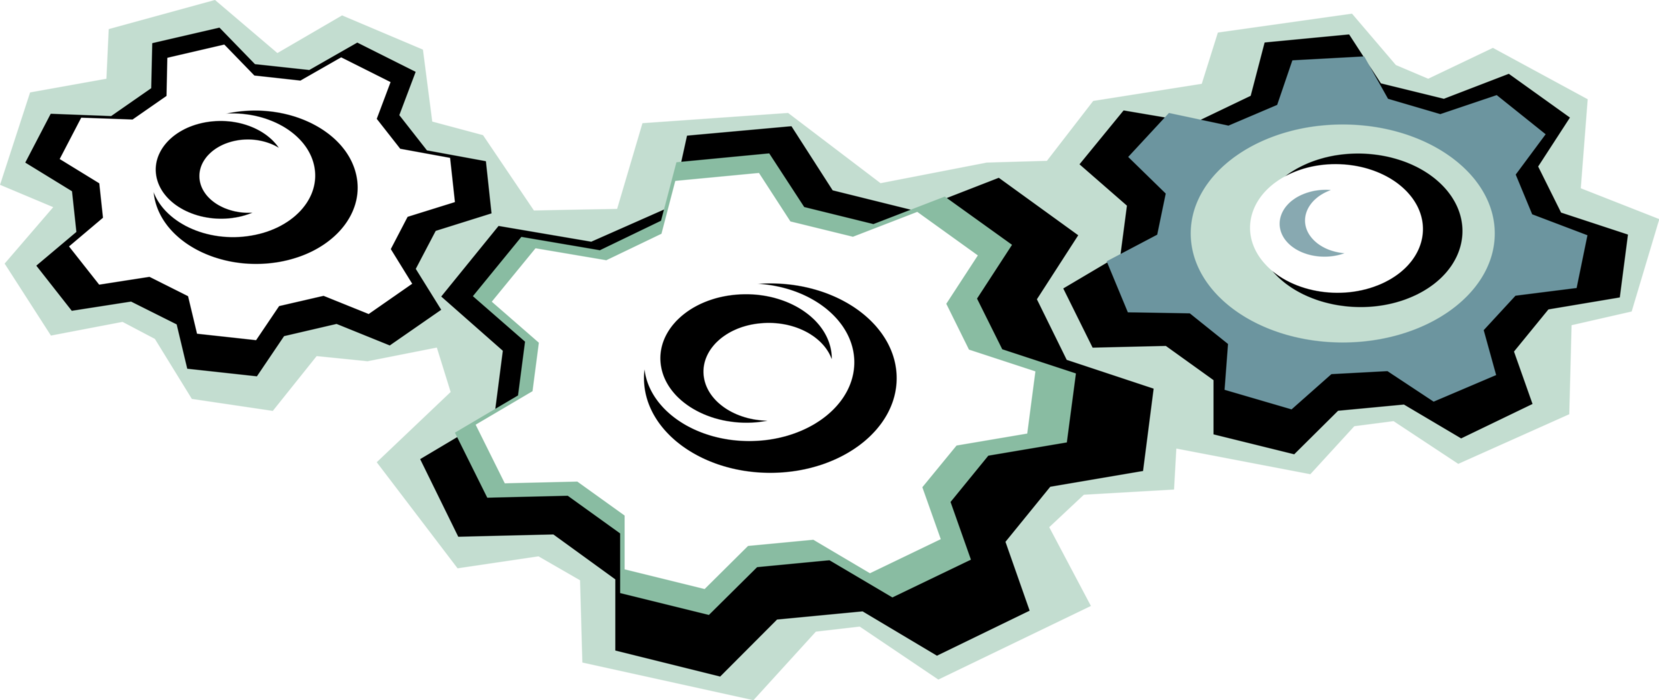 Vector Illustration of Gear Cogwheel Rotating Machine Mechanism with Cut Teeth or Cogs